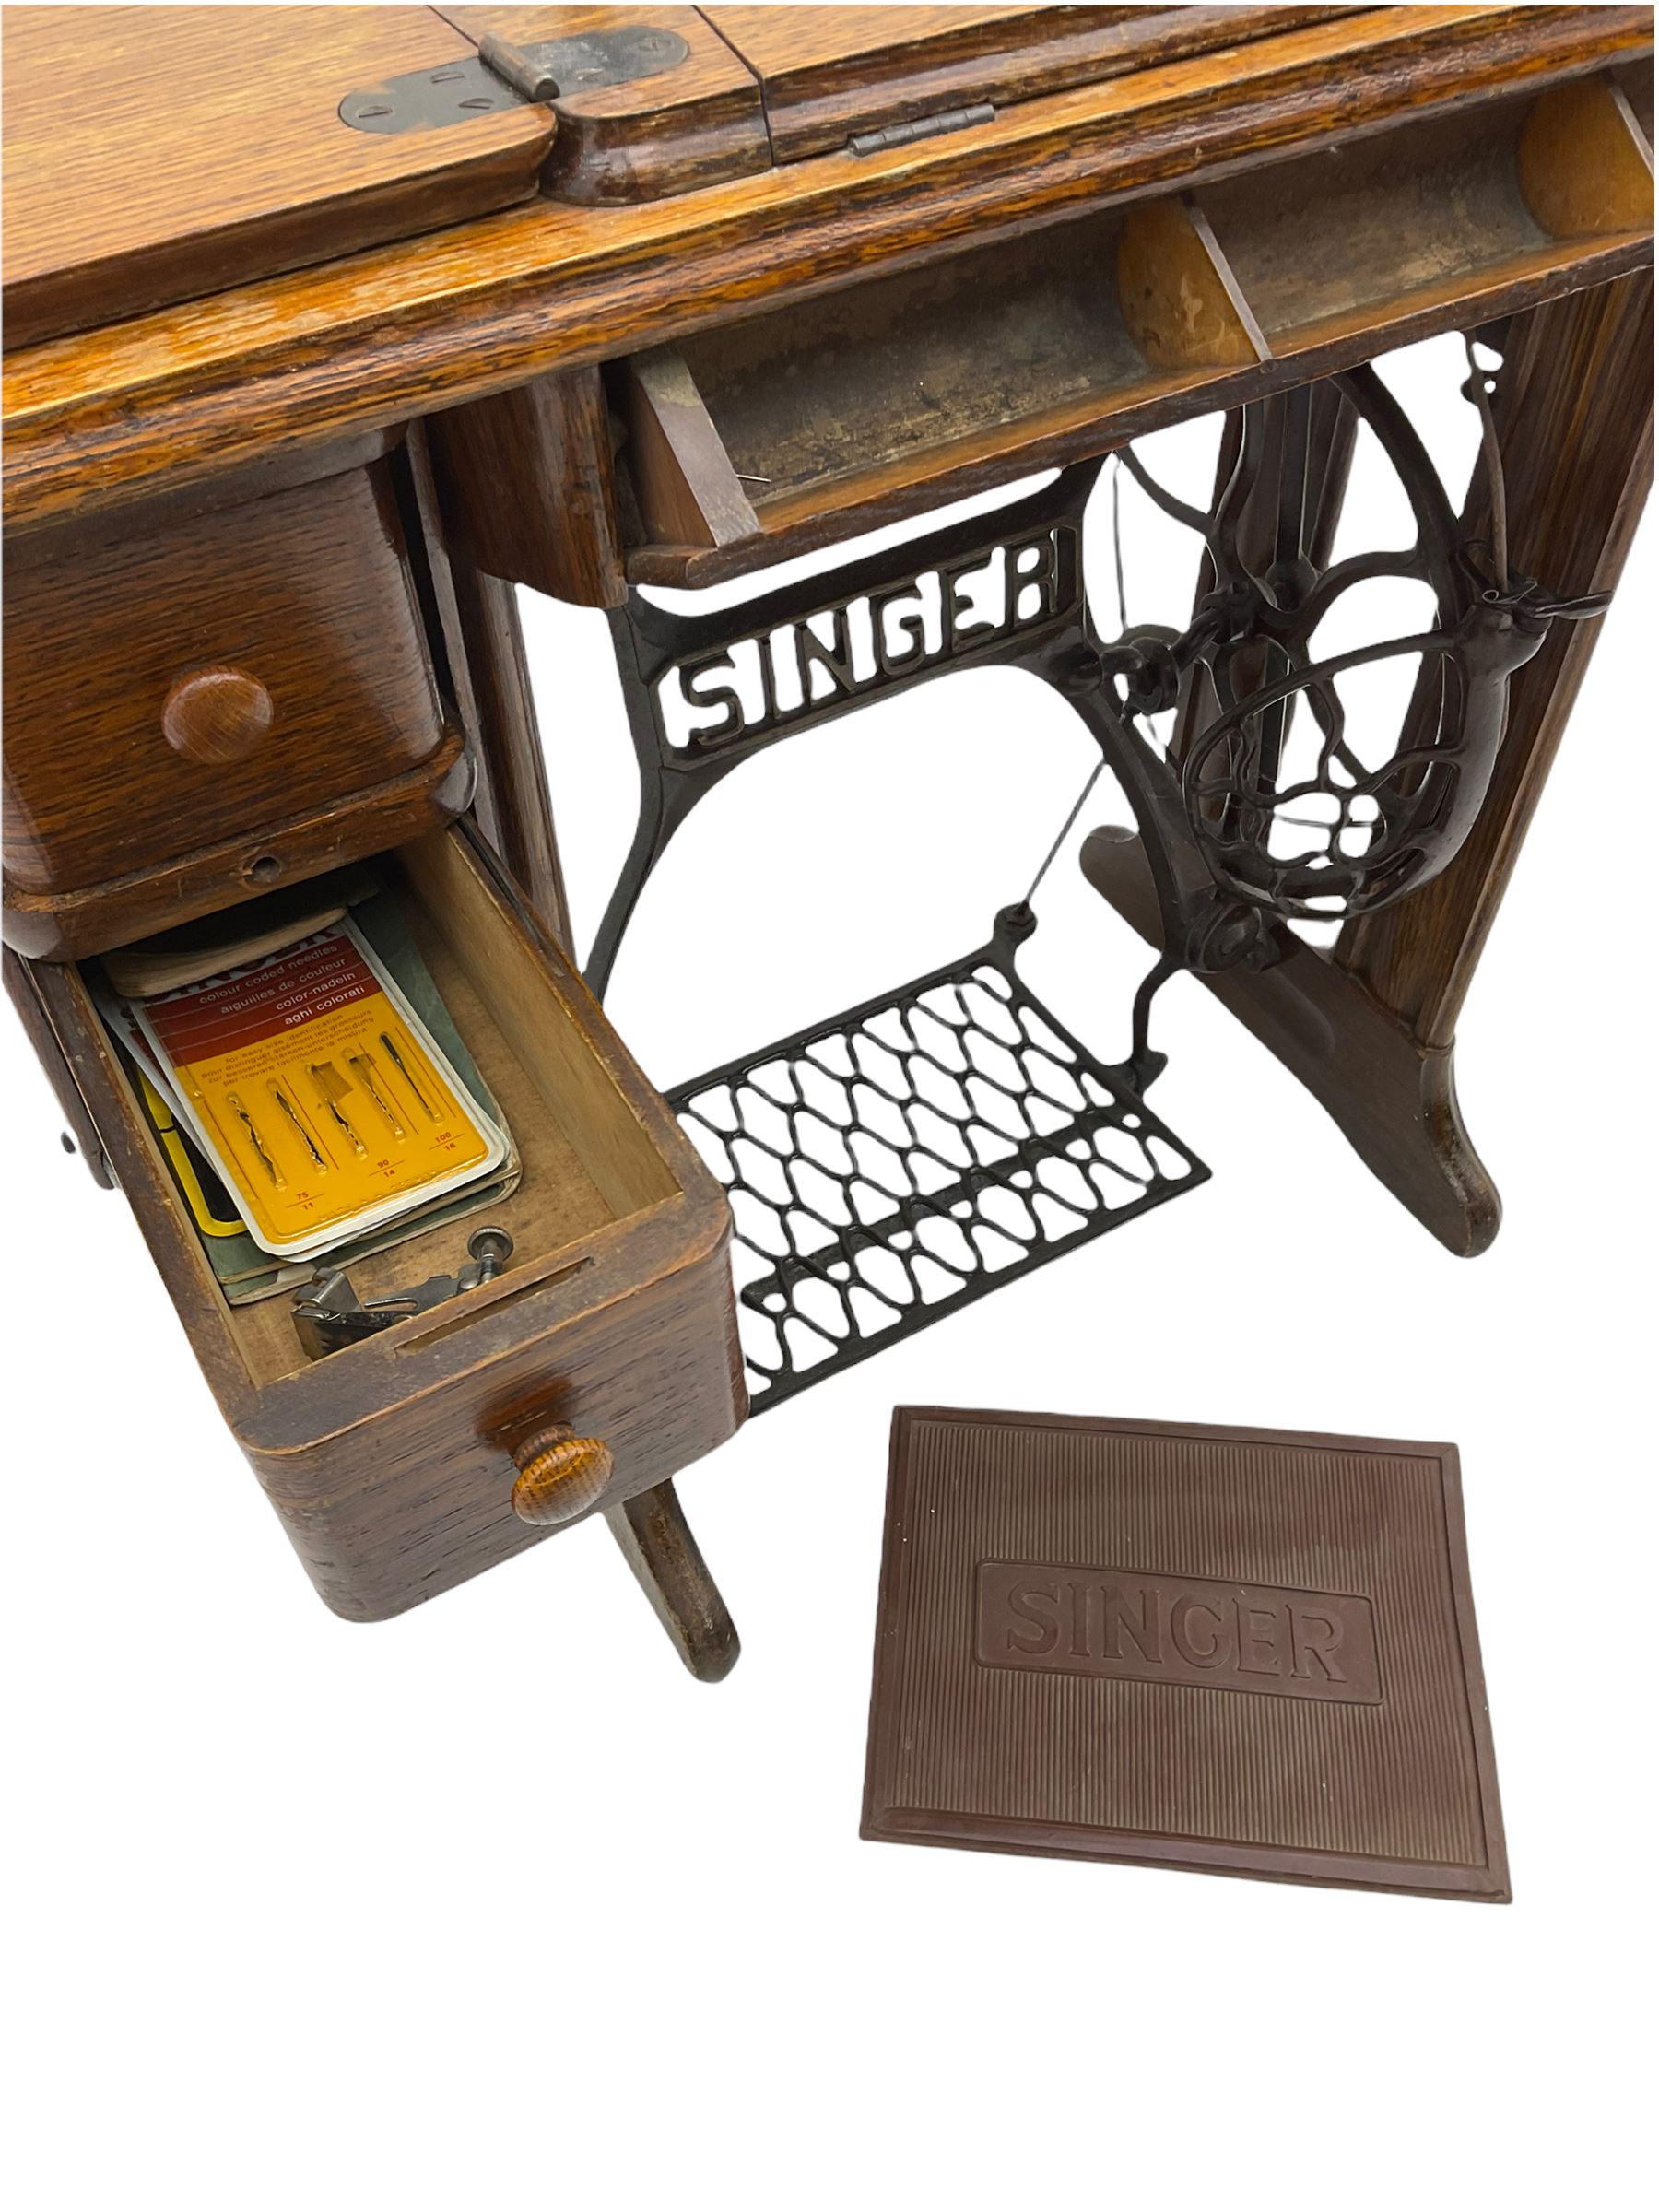 Singer treadle sewing machine - Image 6 of 12